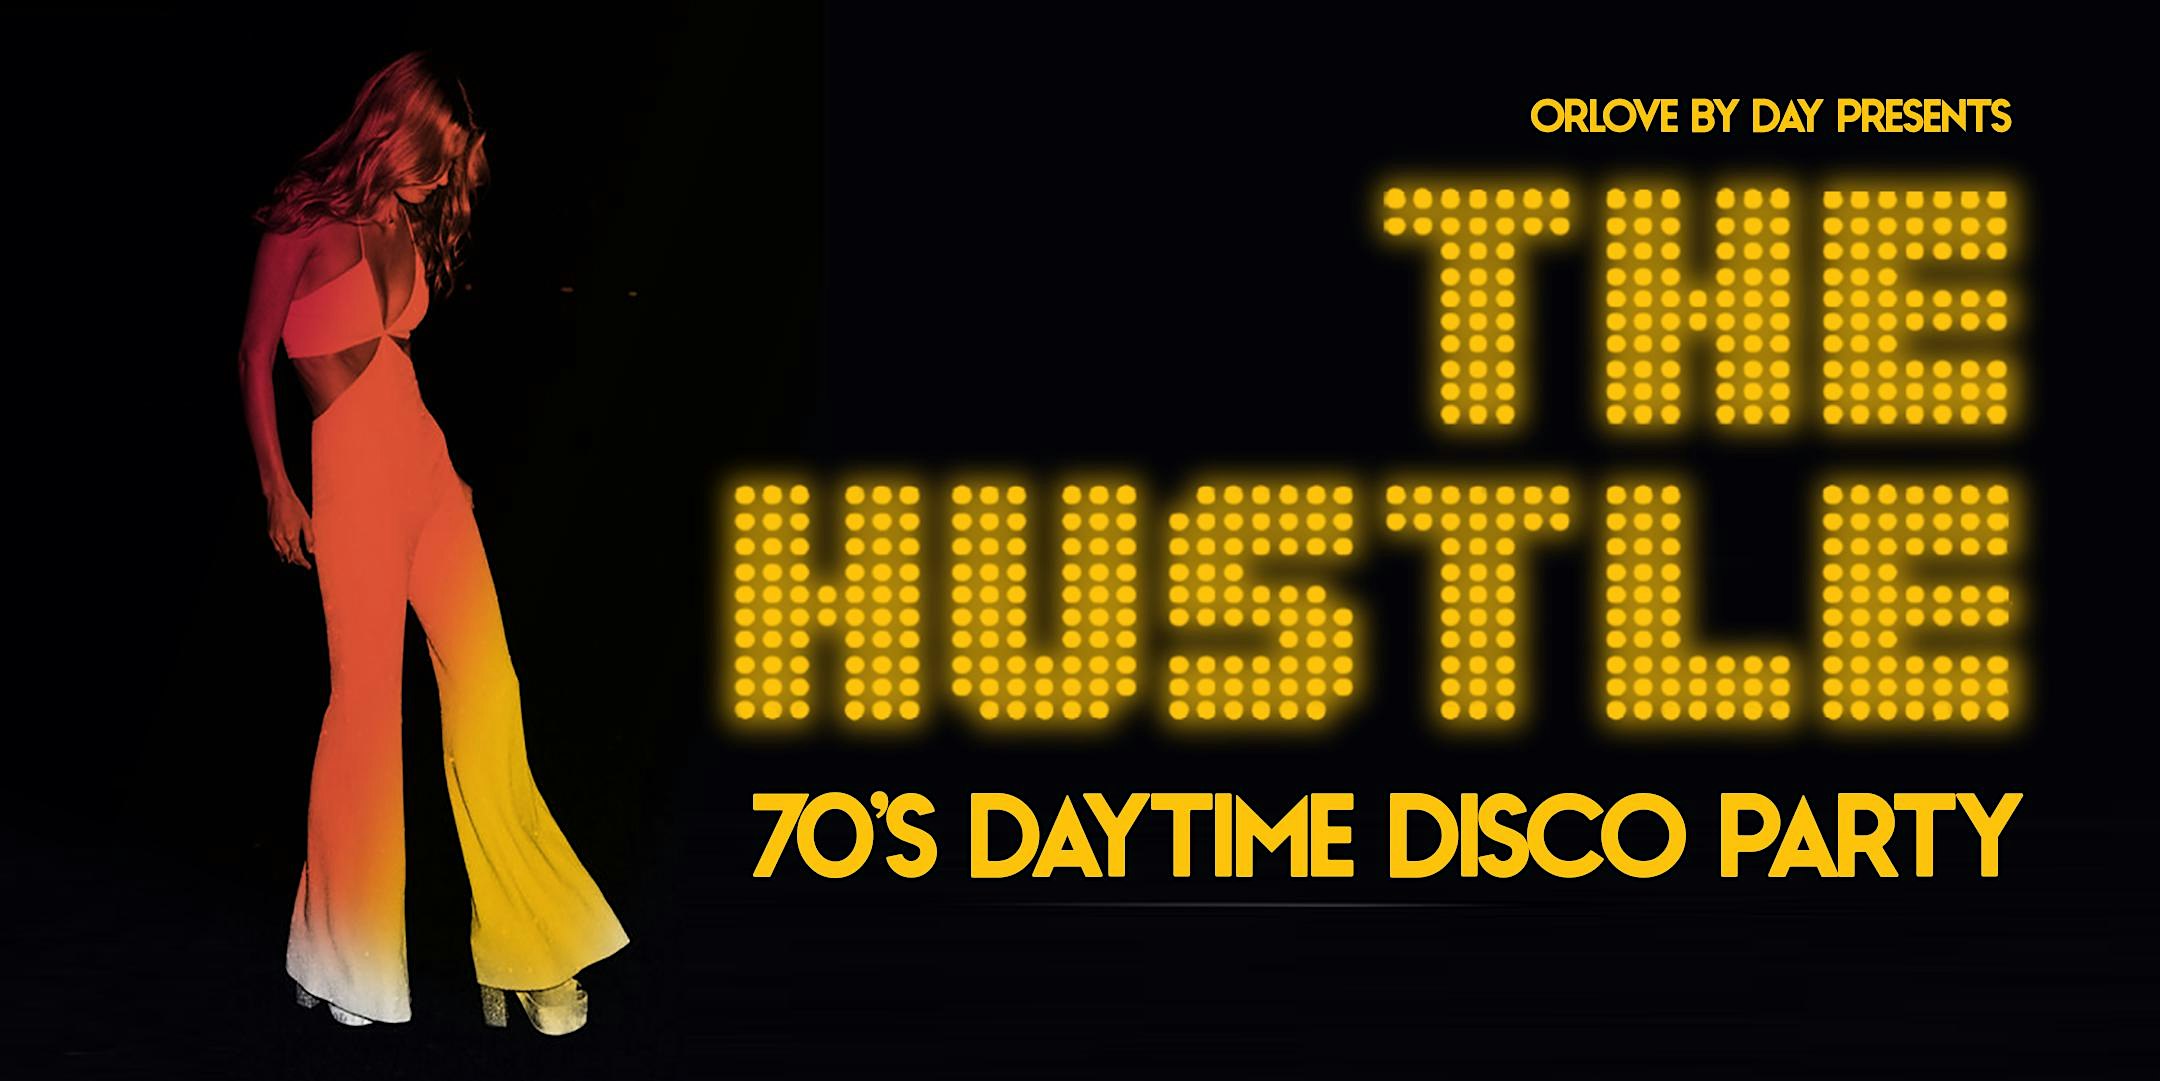 The Hustle: 70's Daytime Disco